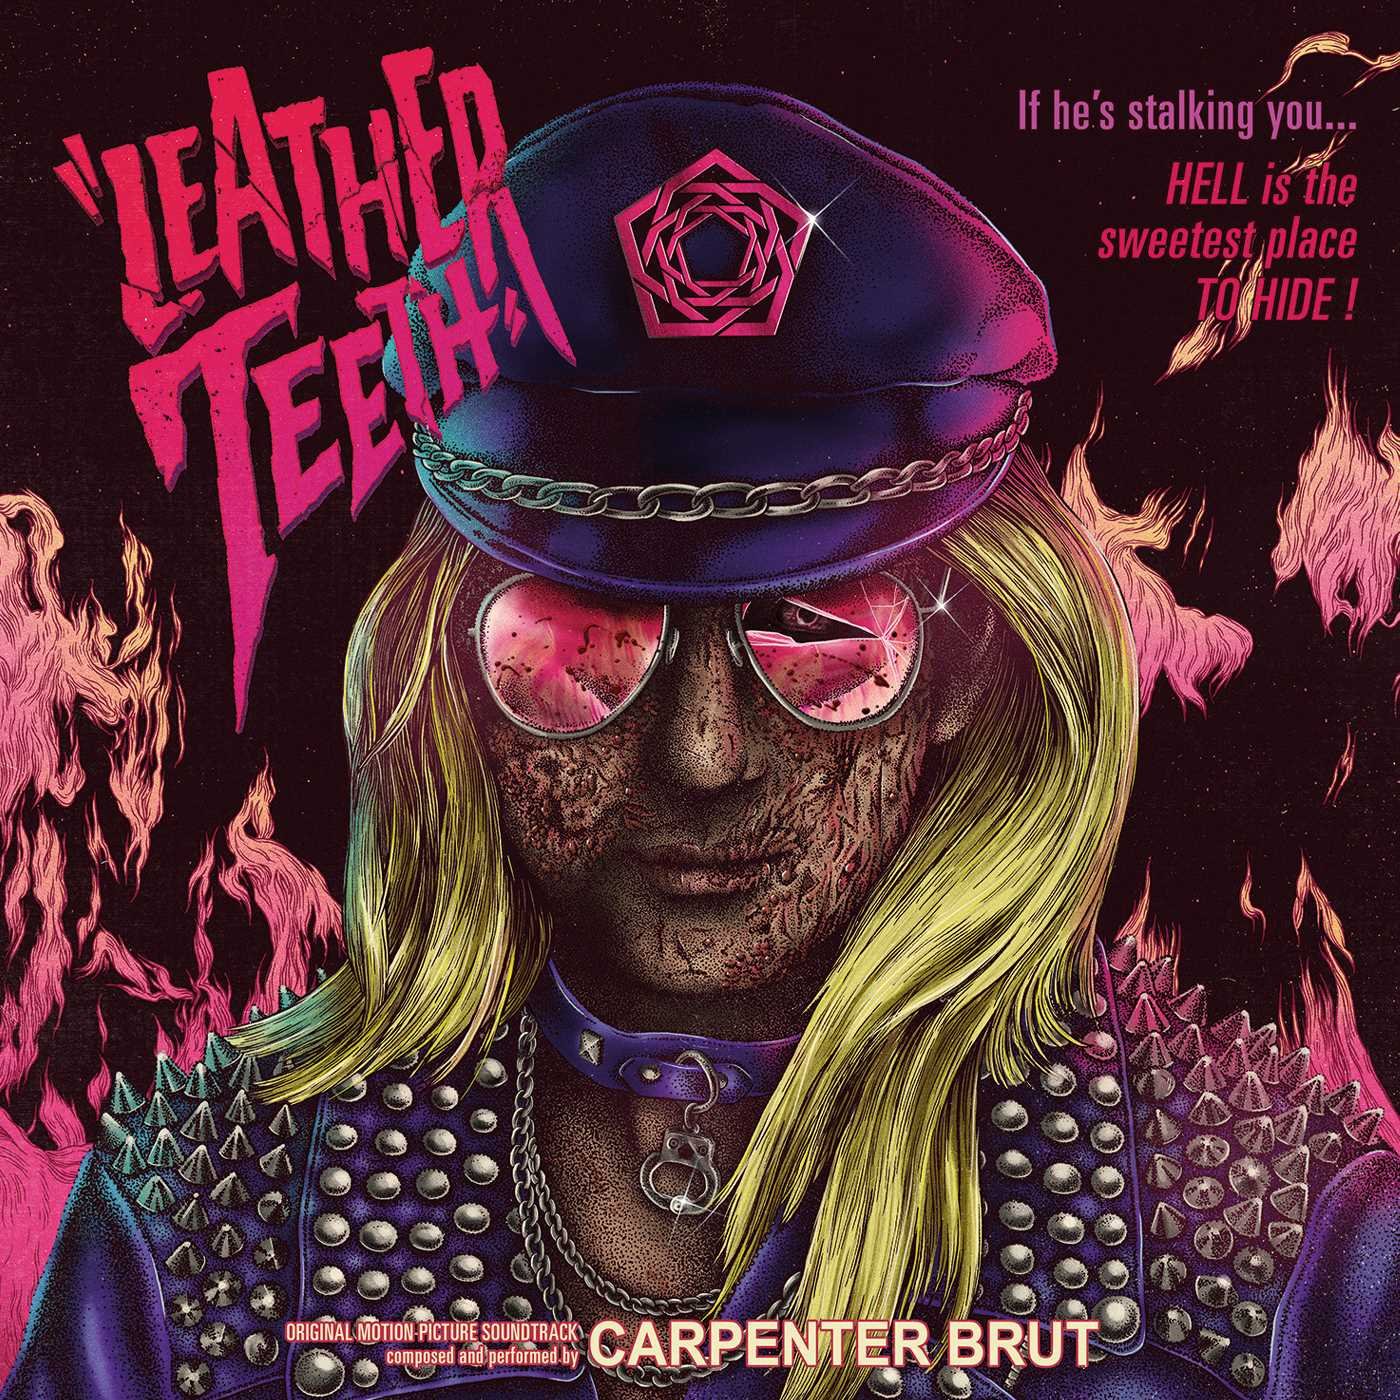 Carpenter Brut "Leather Teeth" CD